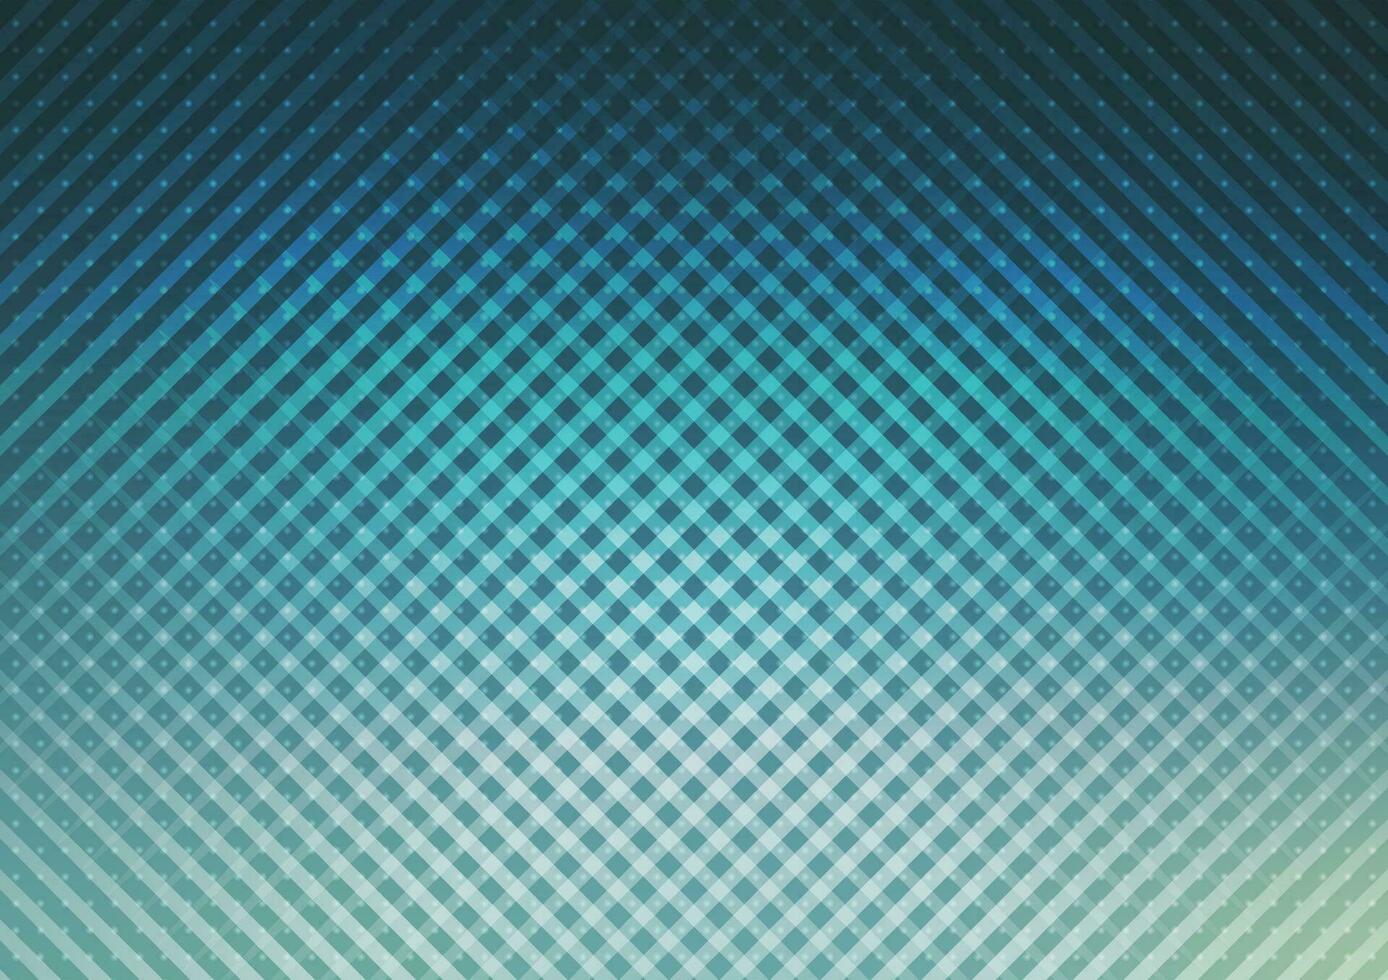 blå linje nt lutning fyrkant mönster ljus geometrisk bakgrund vektor